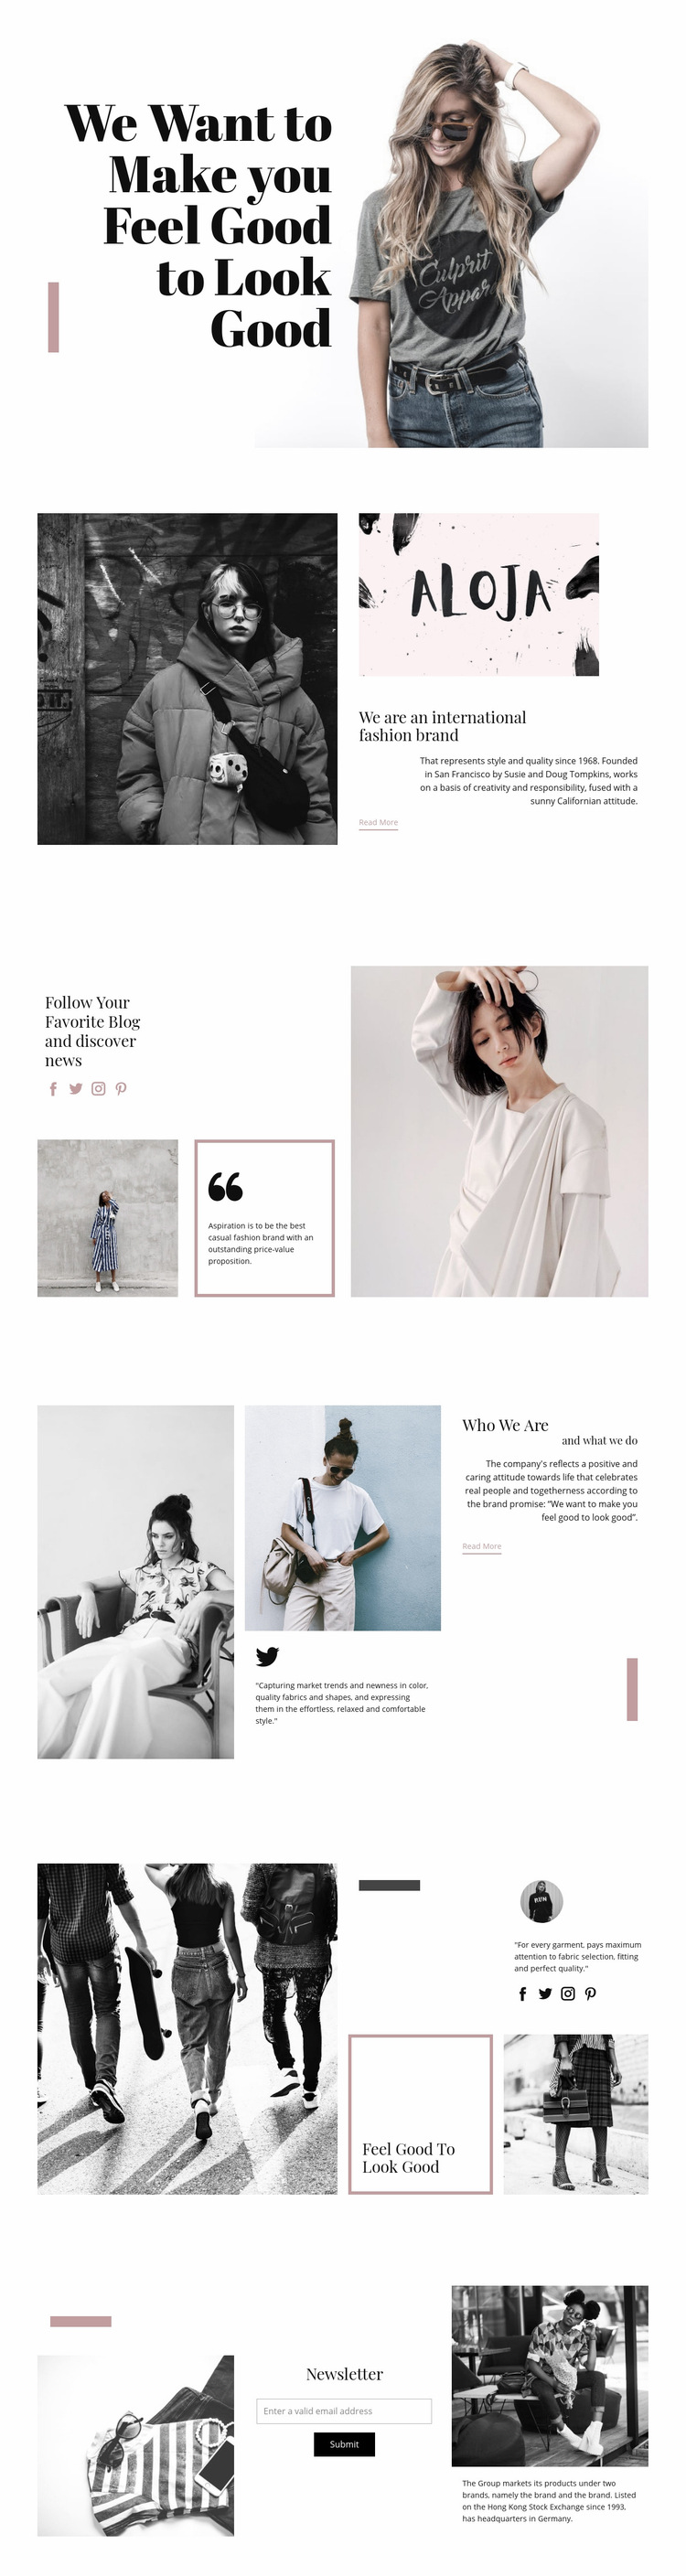 Fashion Style Web Page Design